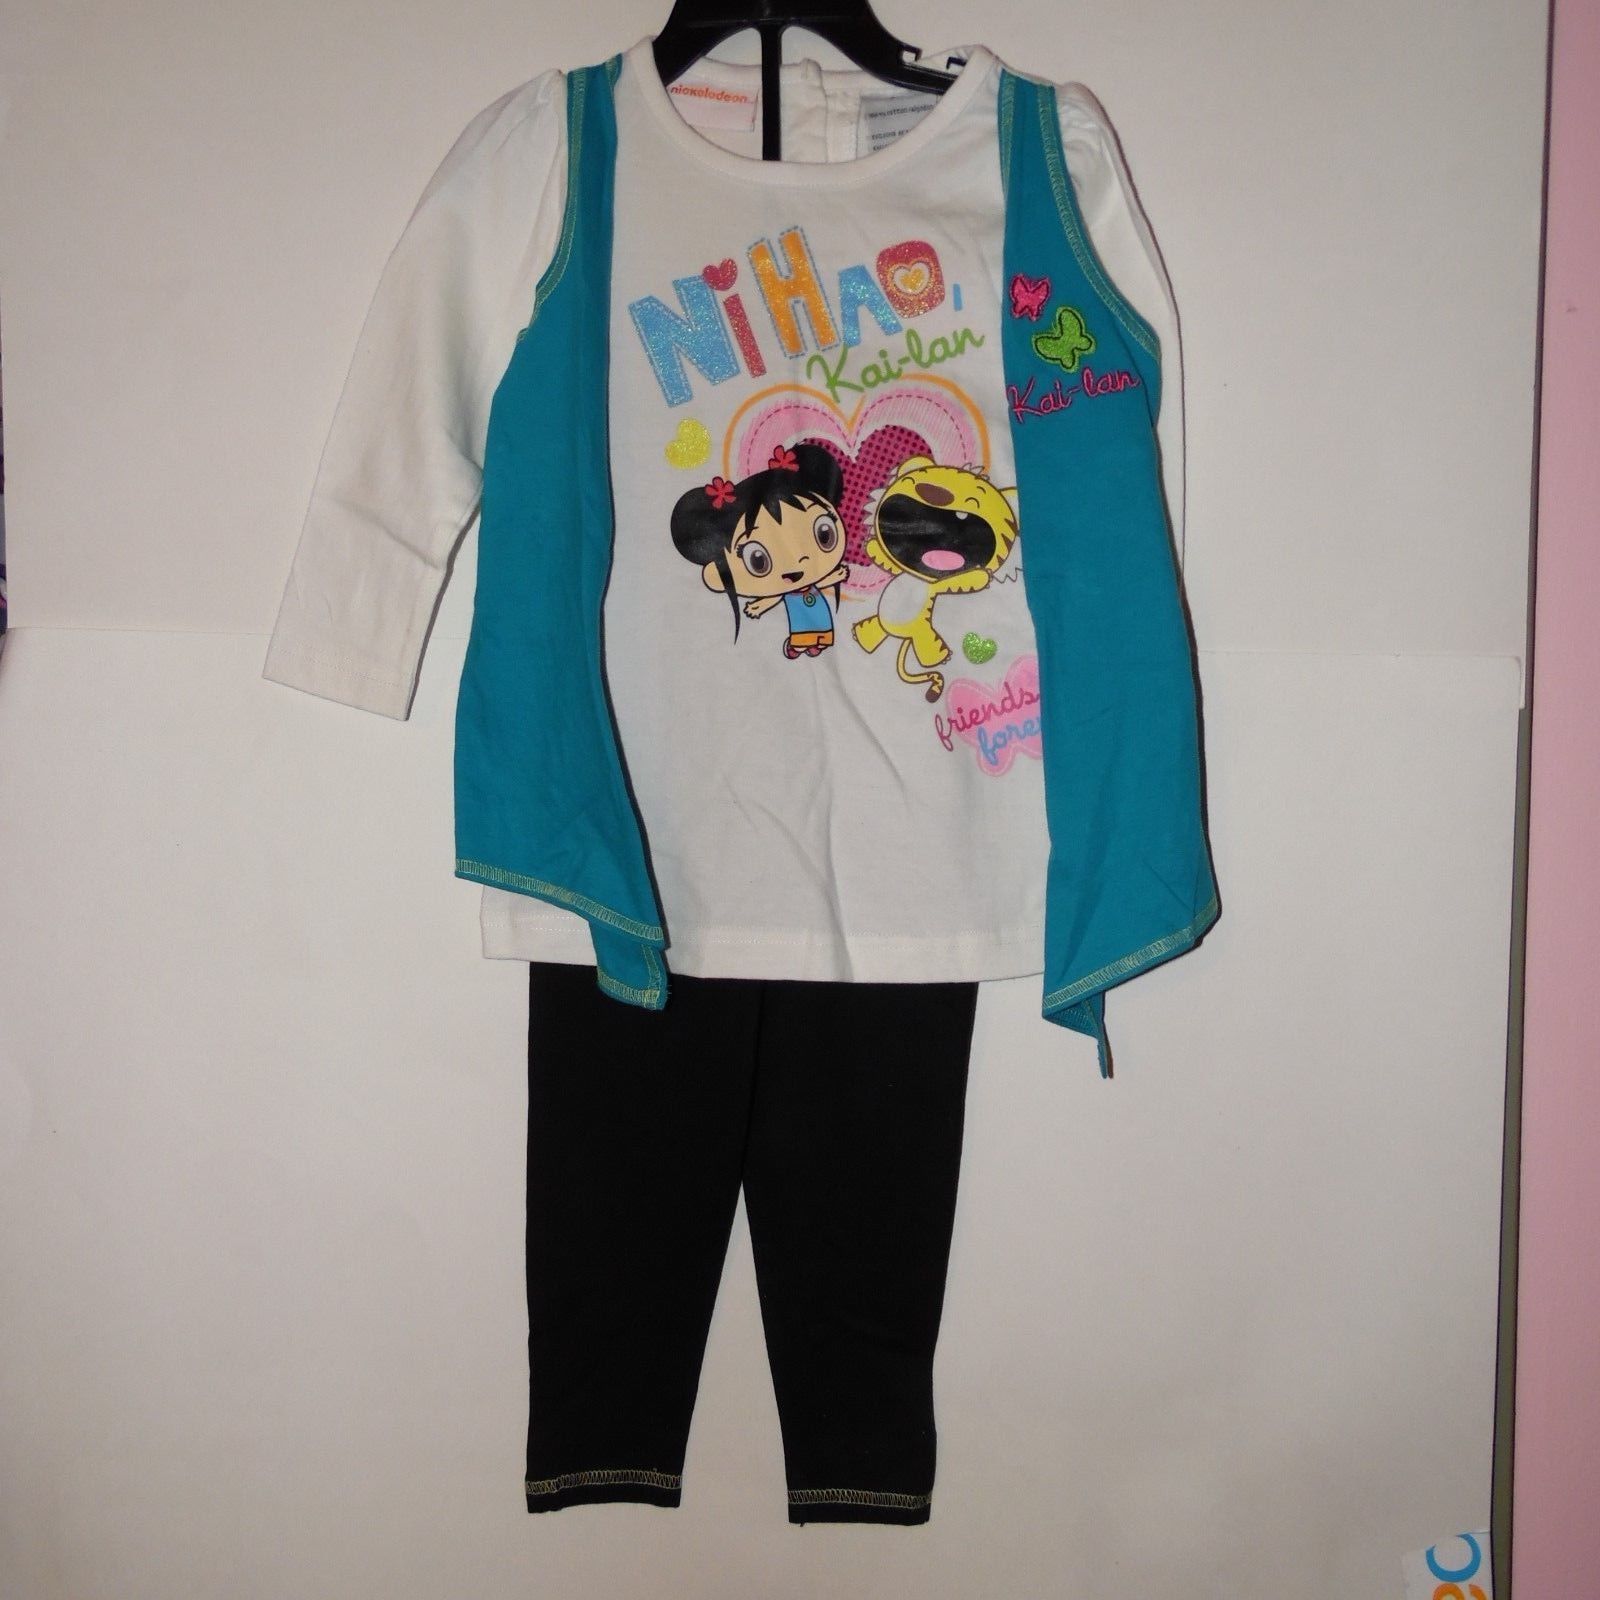 Nihao Kai-lan Toddler Girls 2 piece Pants Outfit Size-24Months NWT - $17.99